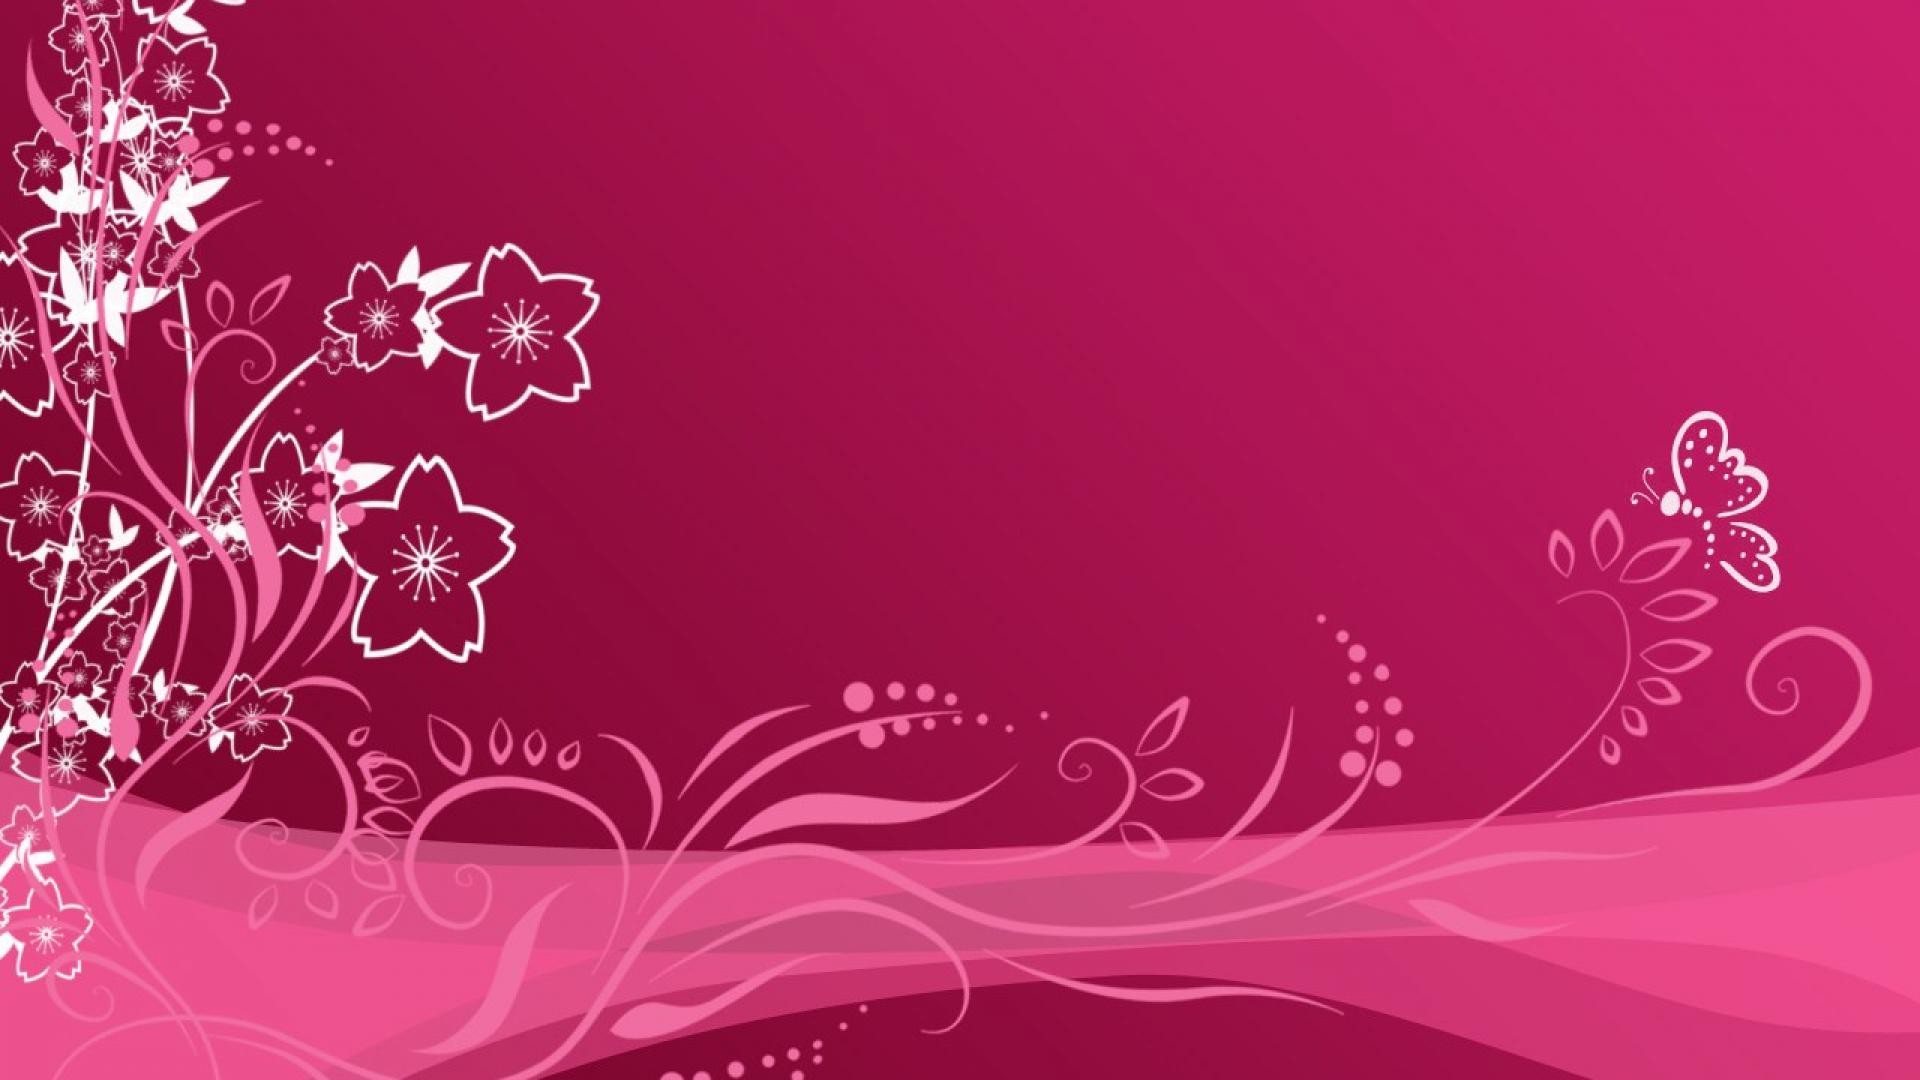 girly desktop wallpaper,pink,text,magenta,purple,floral design